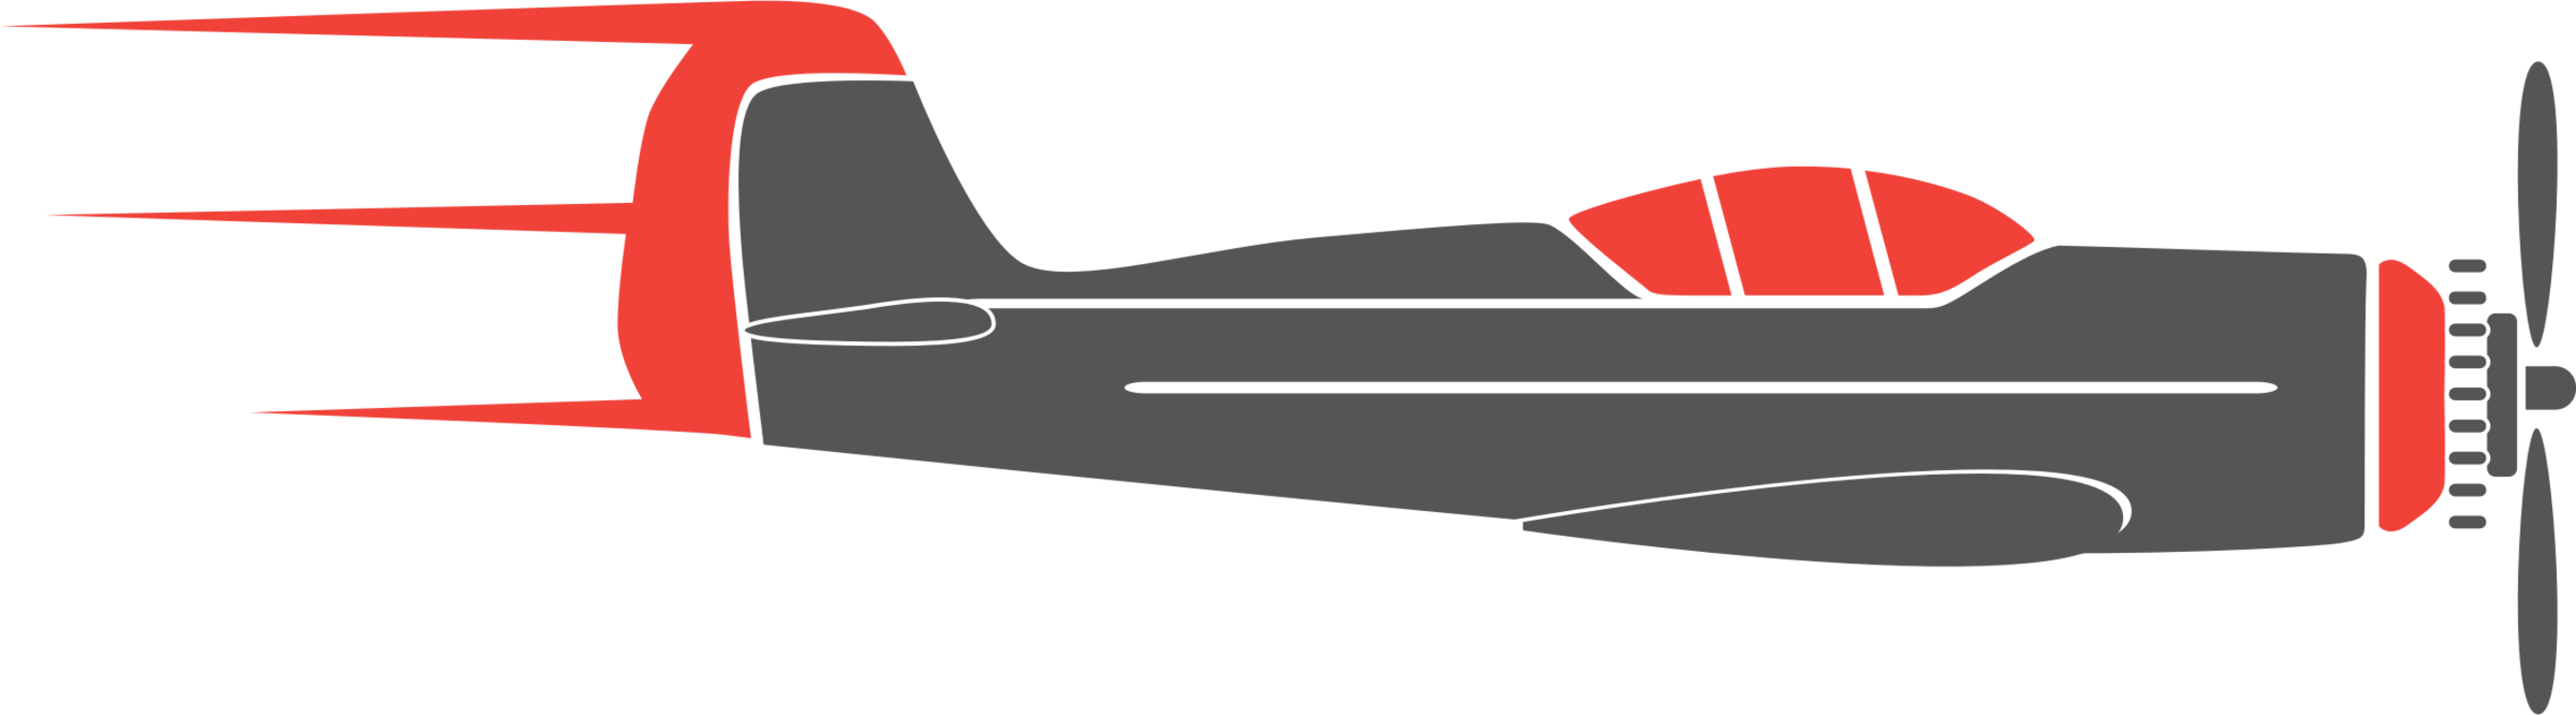 Wing,Light Aircraft,Model Aircraft